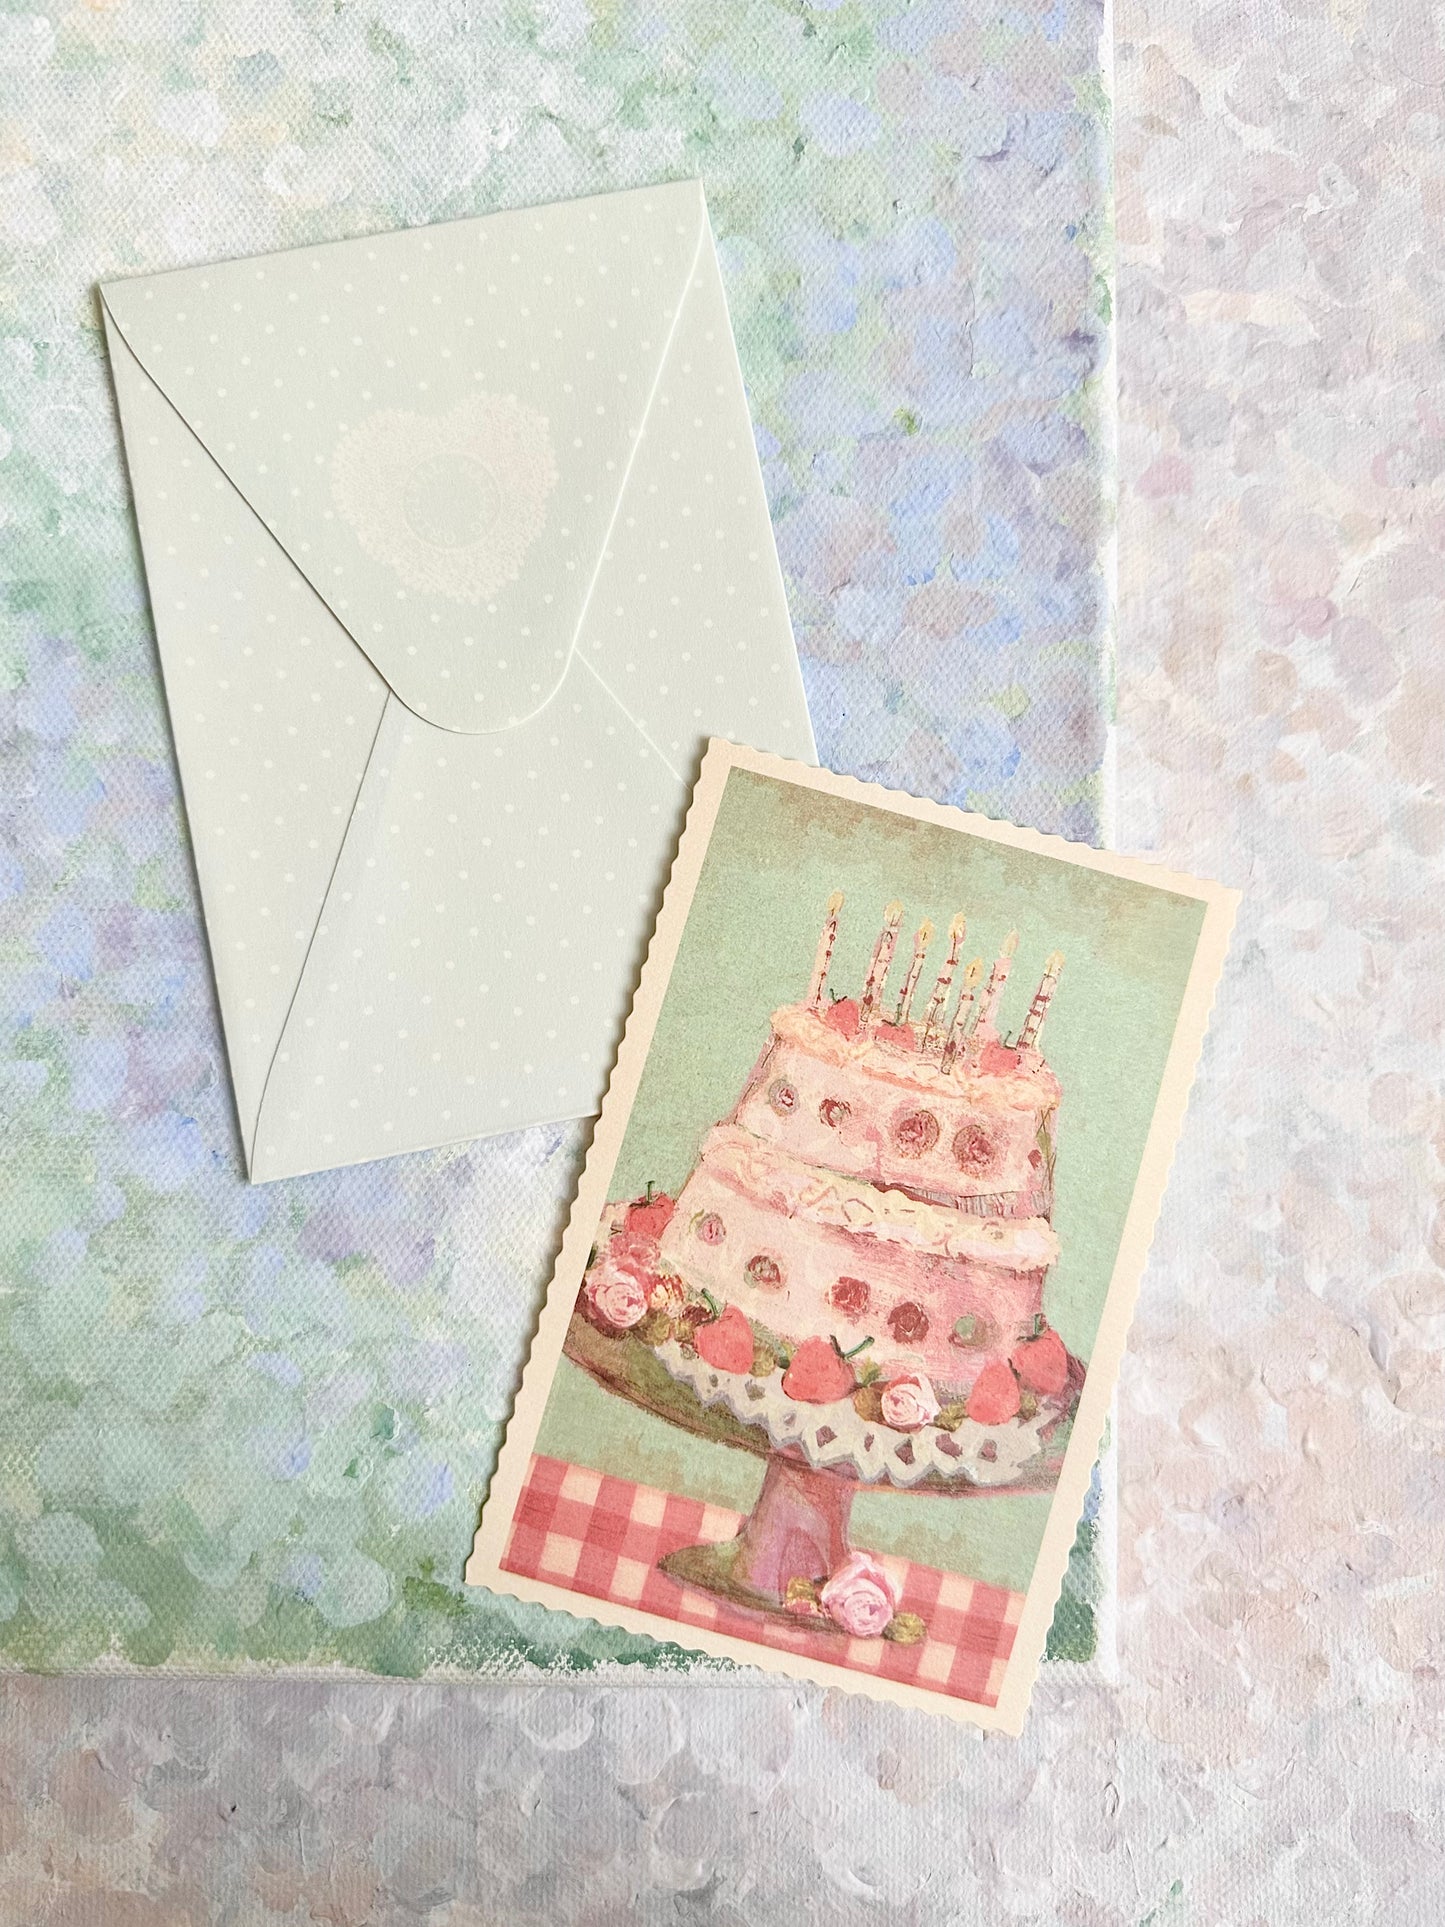 Small Card "Birthday Cake" - 2007